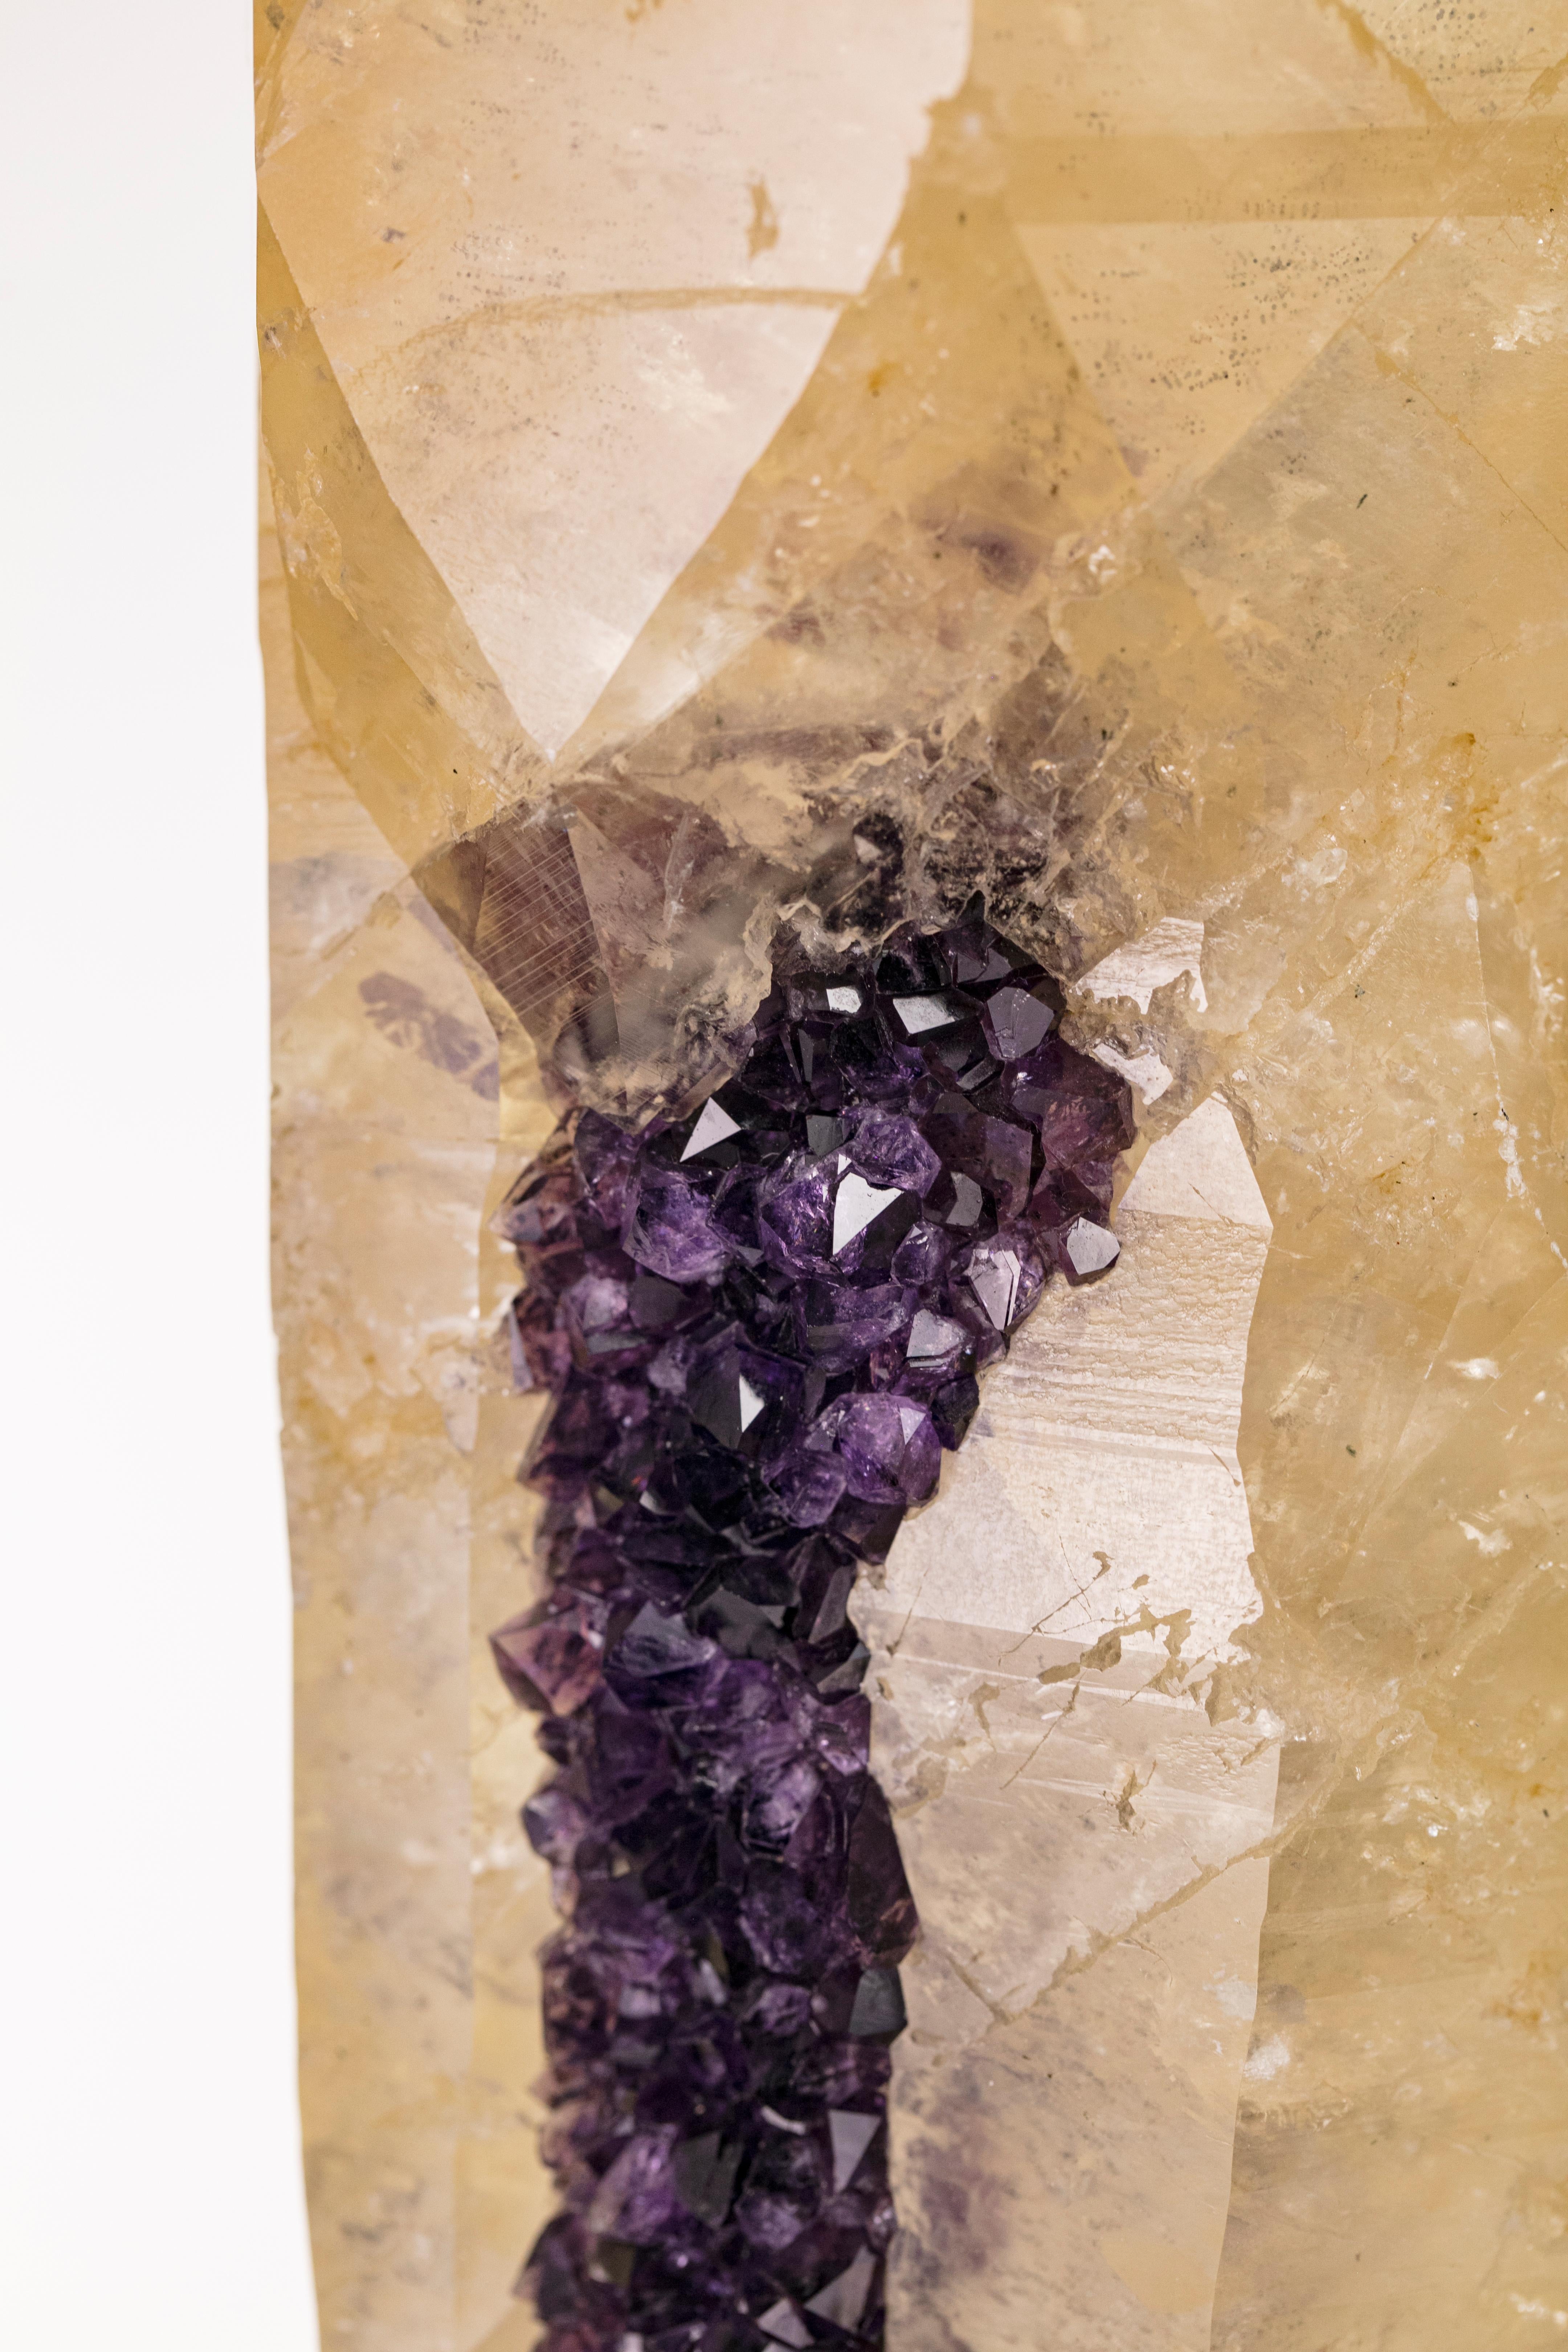 Uruguayan Flame-Shaped Calcite on Amethyst Crystal Mineral Specimen- Artigas, Uruguay For Sale